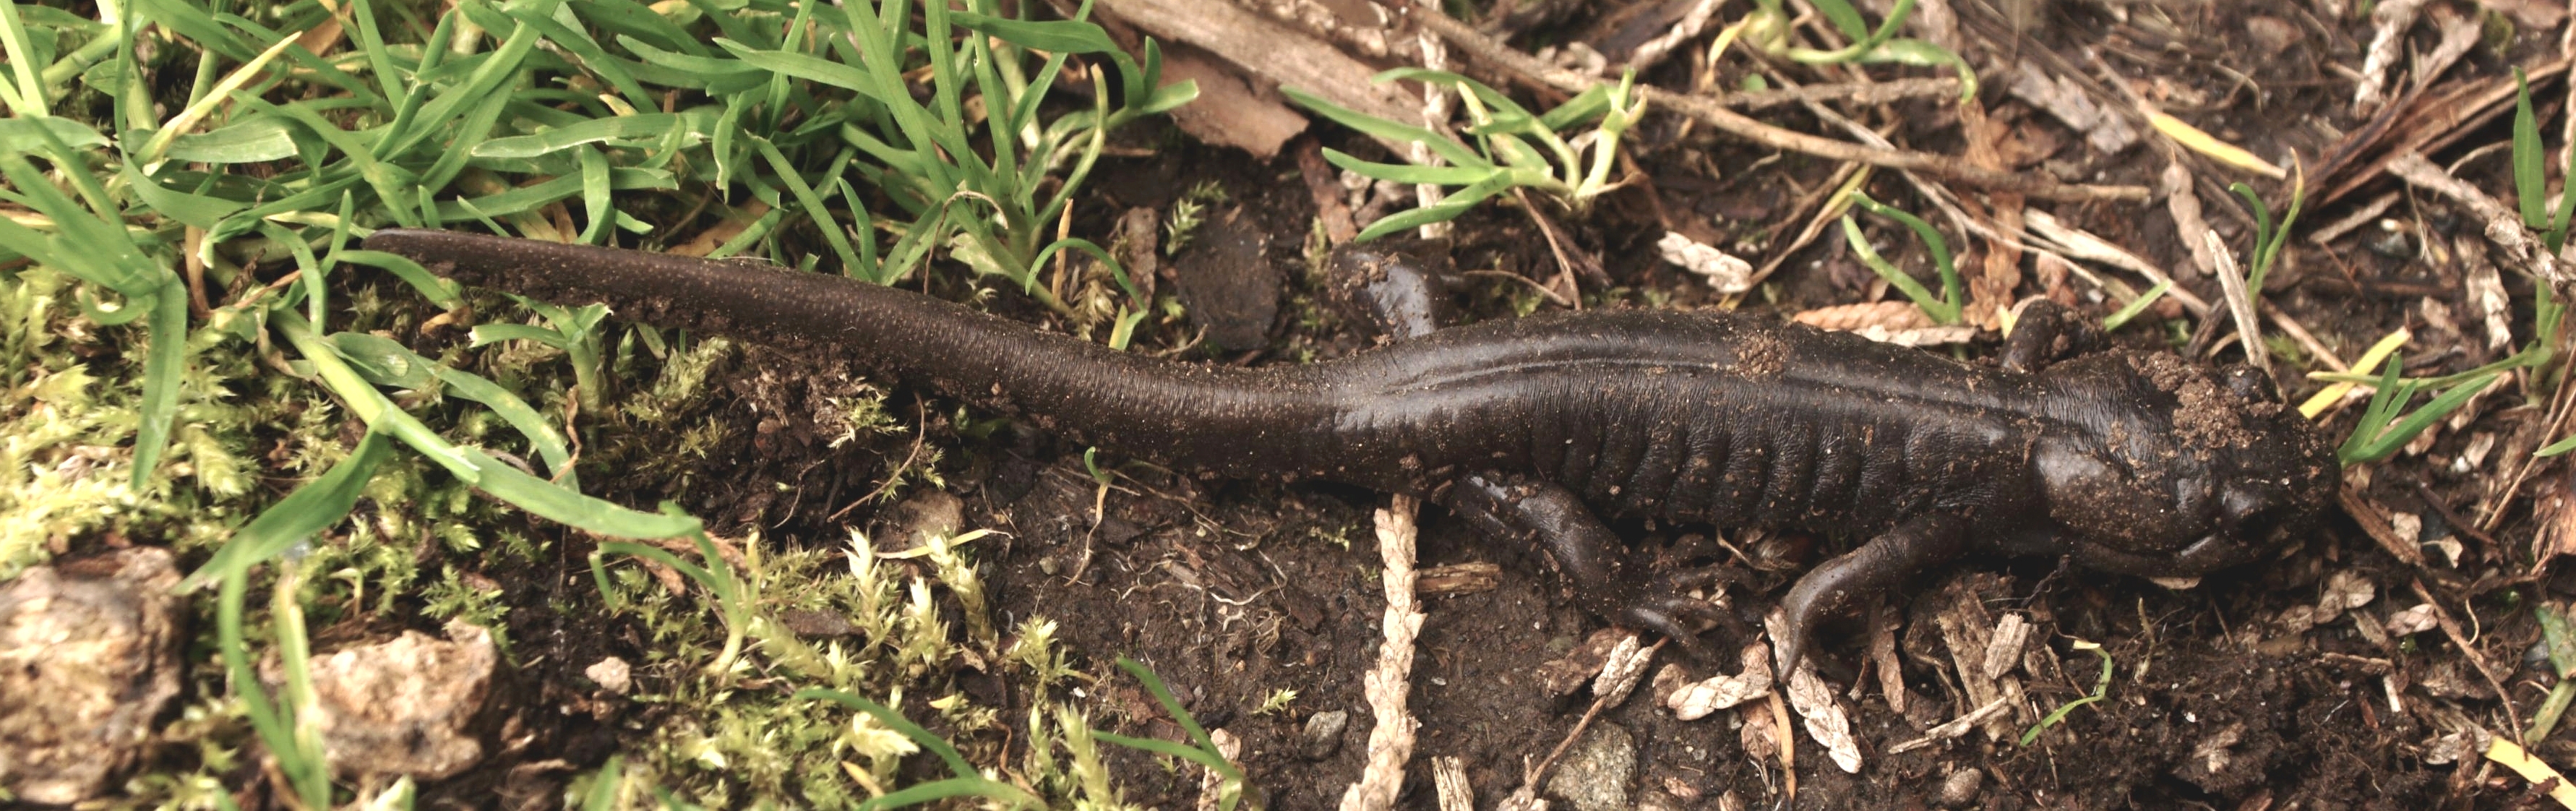 File:Northwestern Salamander (Ambystoma gracile).jpg - Wikimedia Commons